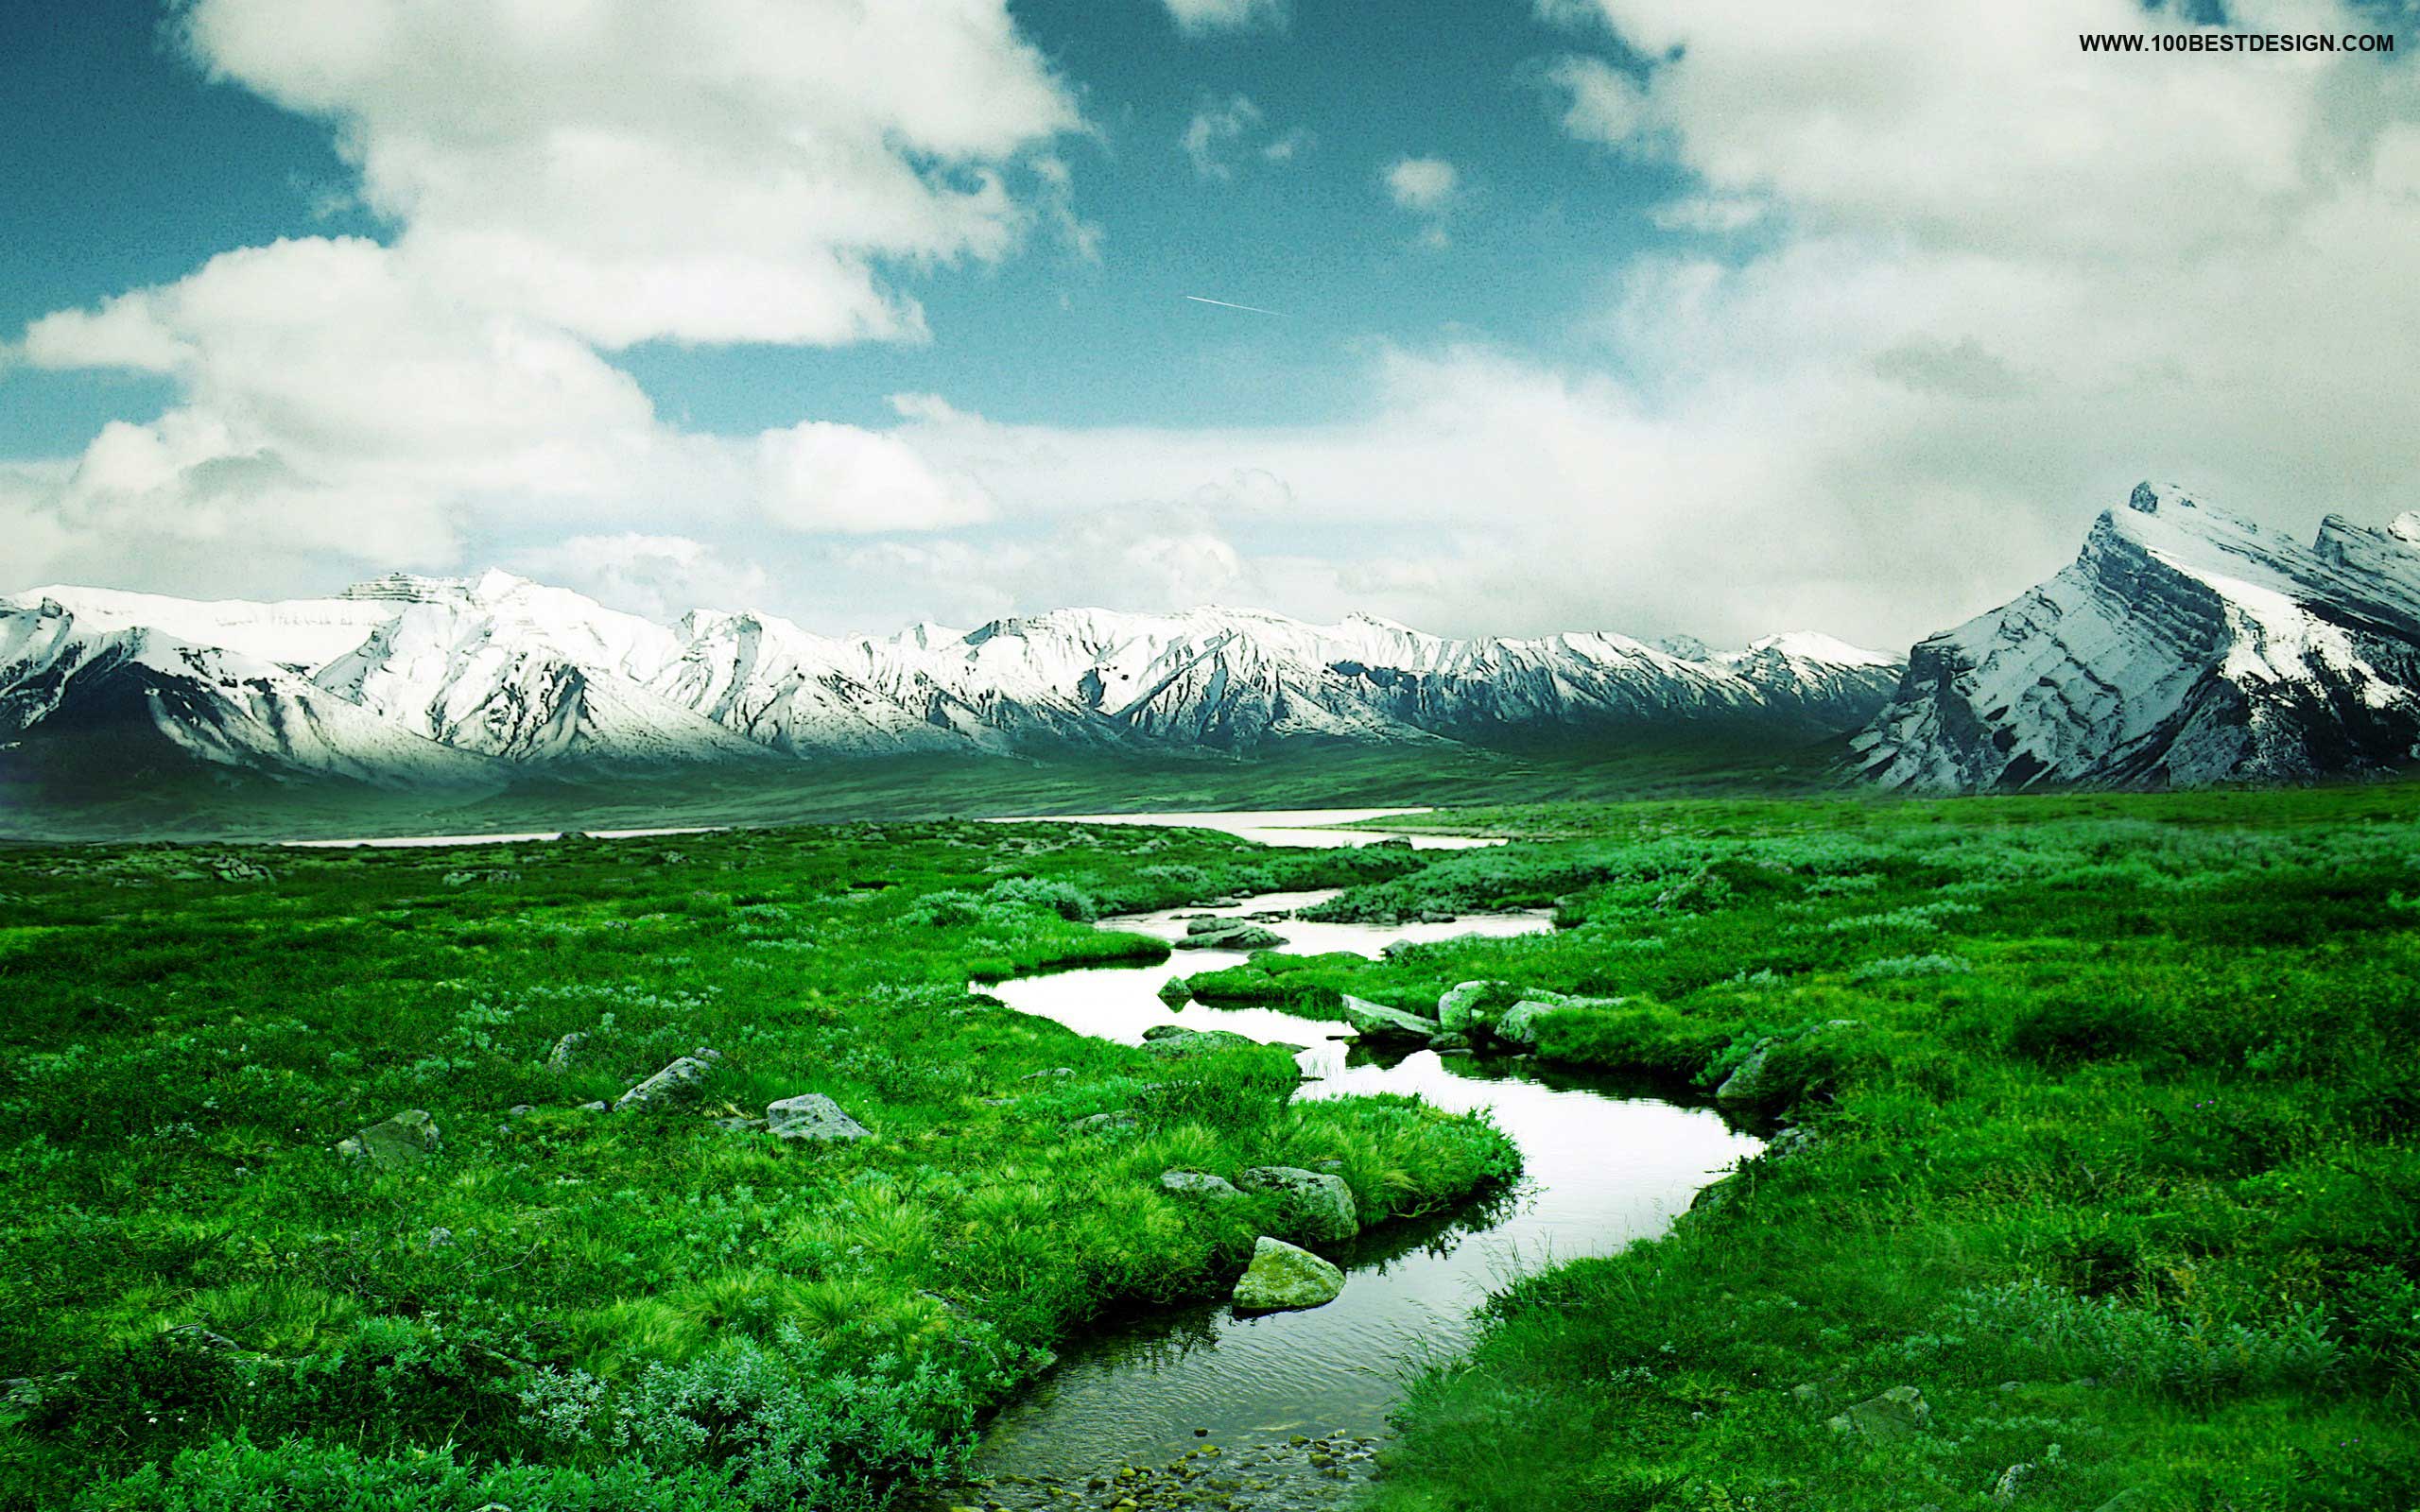 Top 100 nice nature desktop wallpaper and background | 100 Best Design